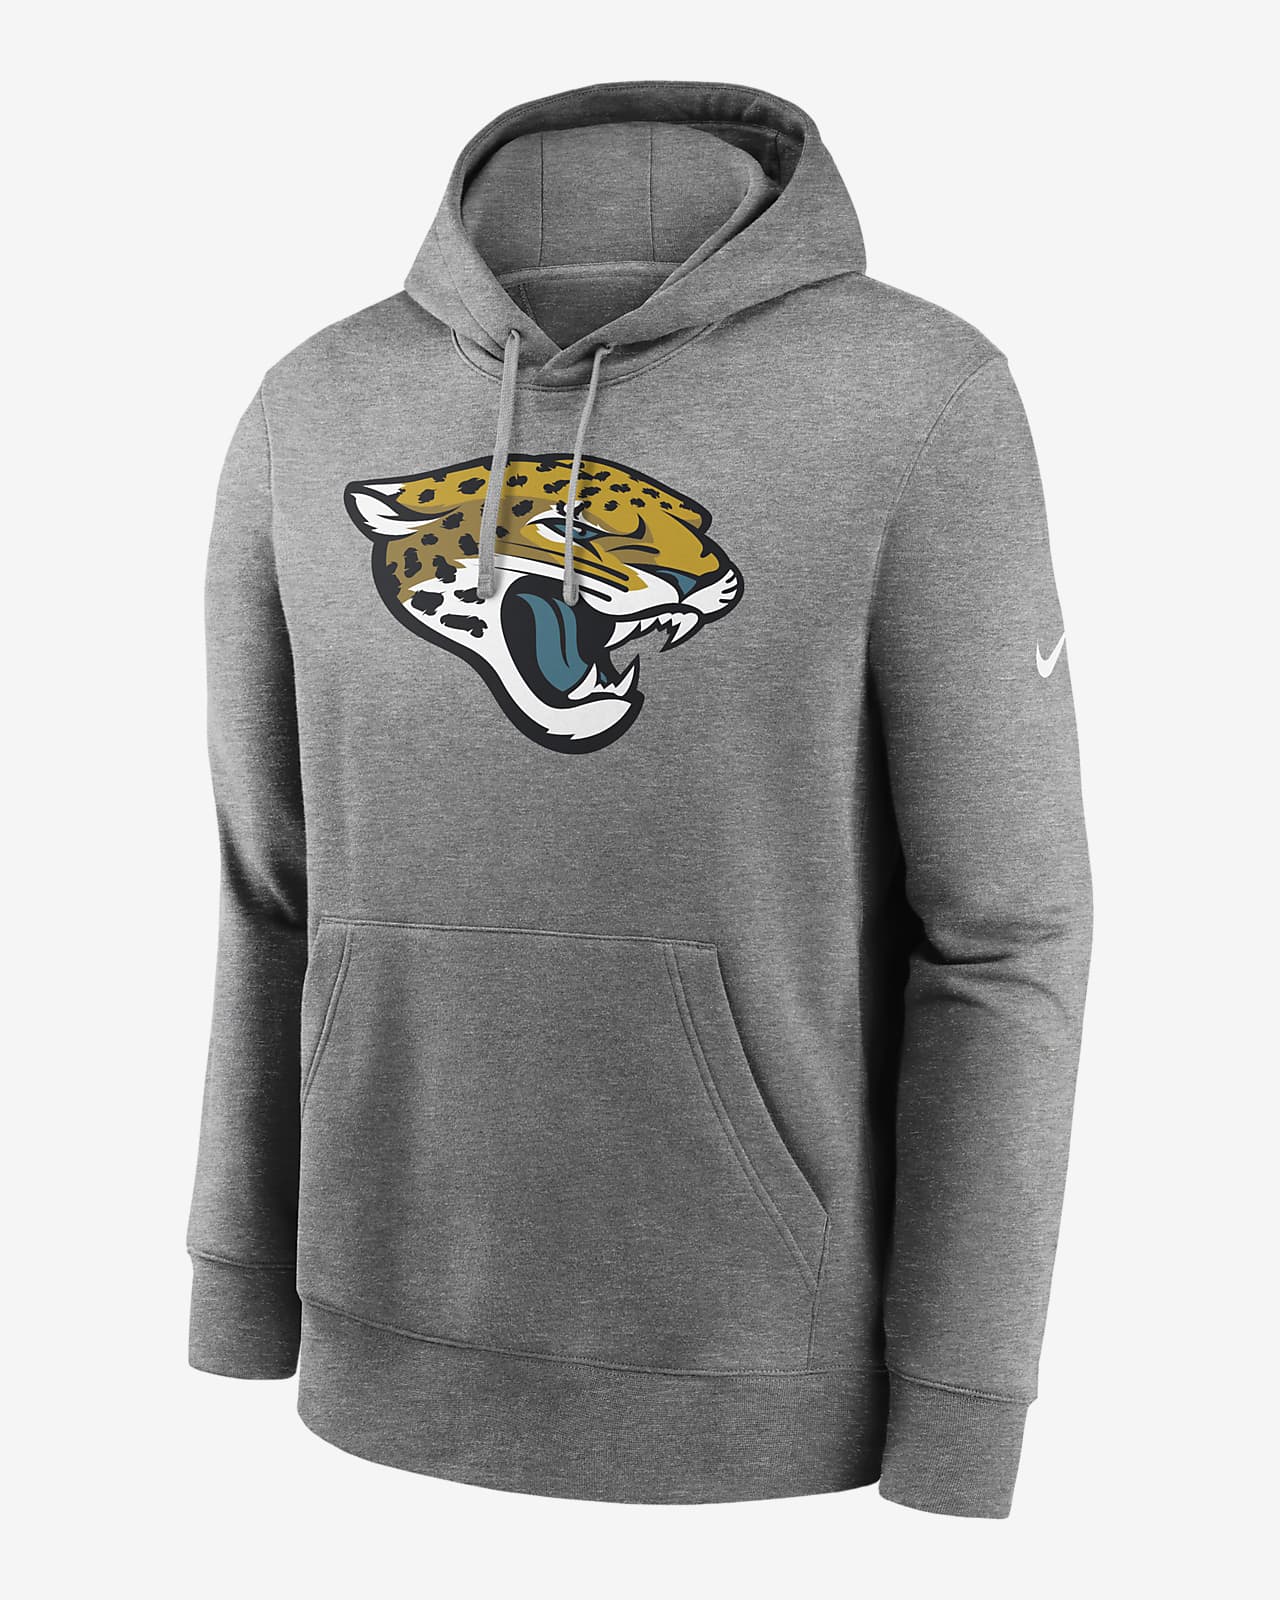 Men's Nike Heathered Gray Jacksonville Jaguars Rewind Club Fleece Pullover Hoodie Size: Small